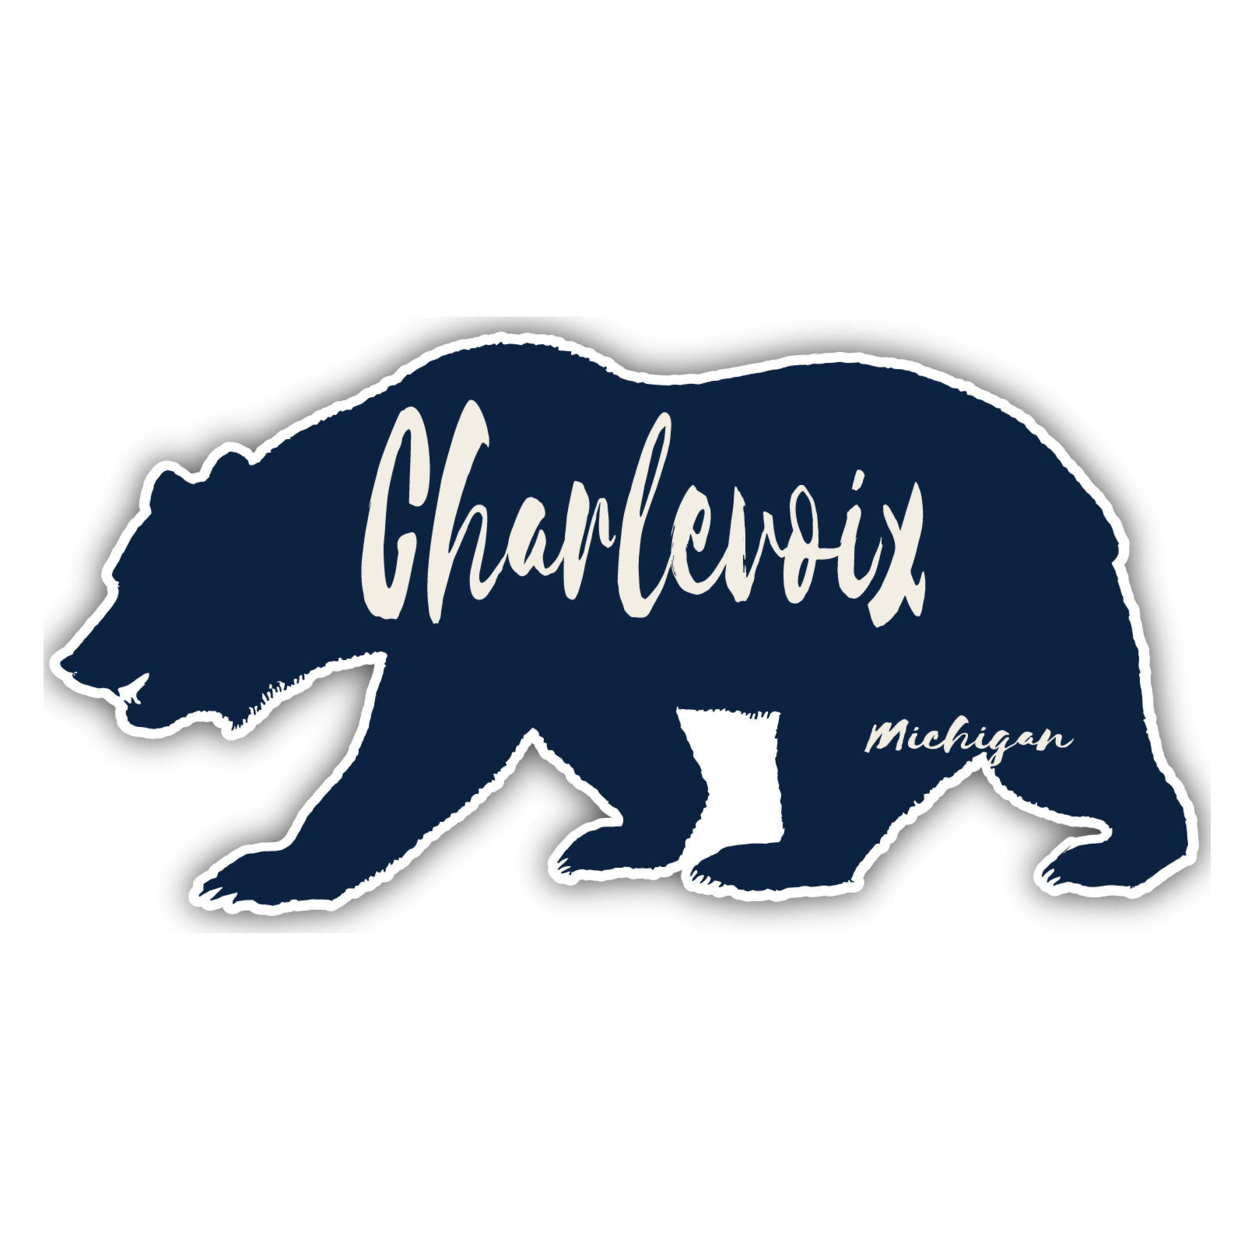 Charlevoix Michigan Souvenir Decorative Stickers (Choose Theme And Size) - Single Unit, 2-Inch, Bear